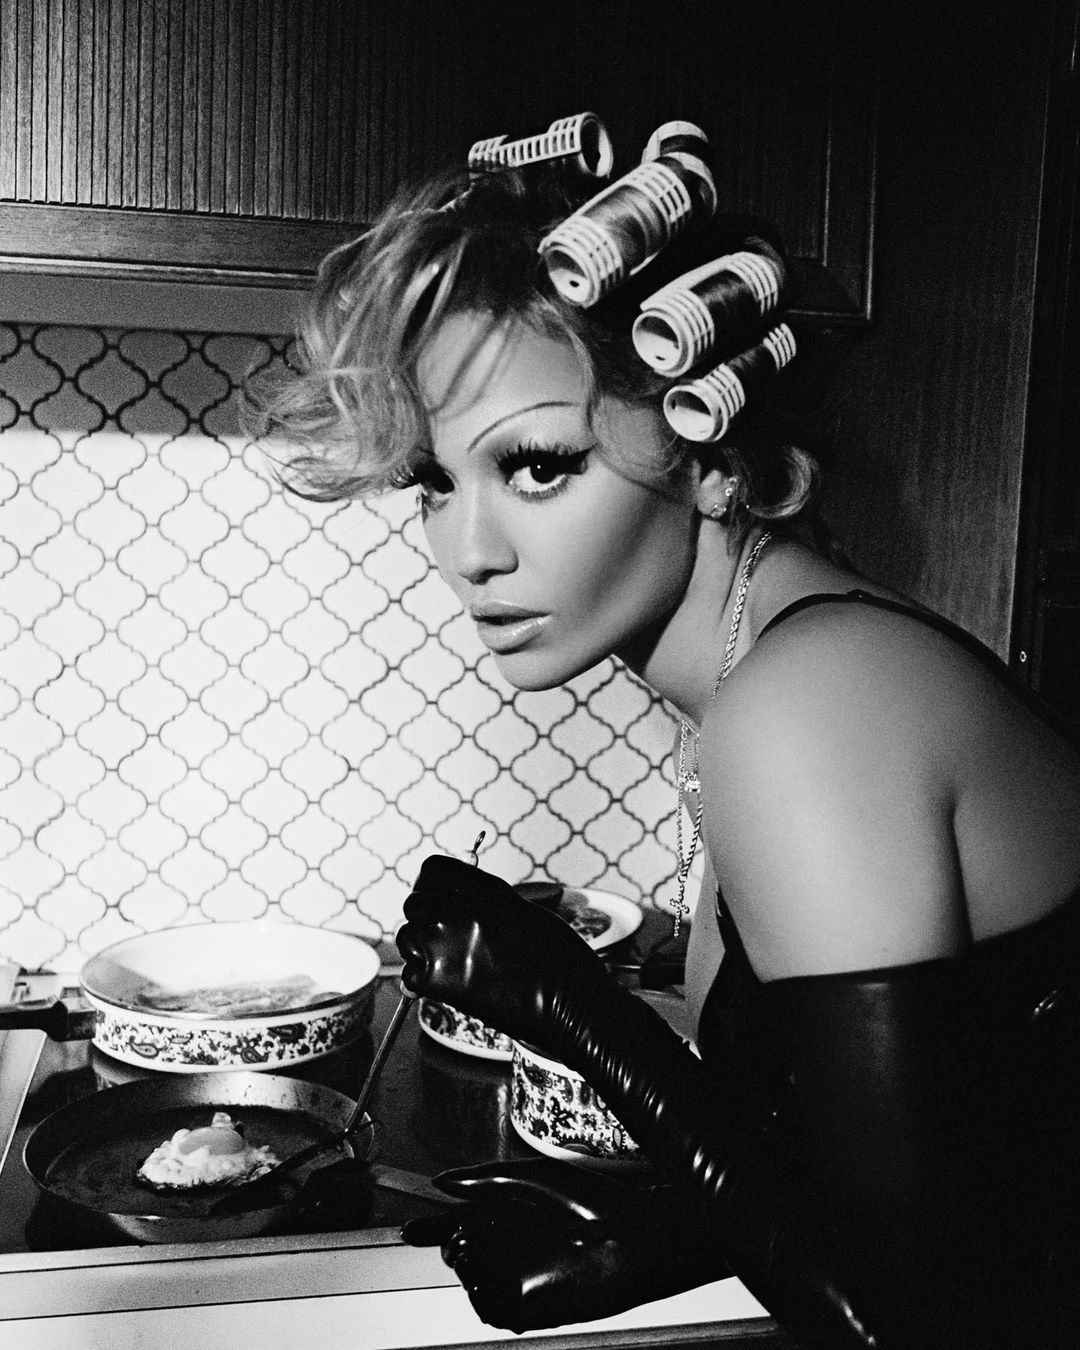 Fotos n°5 : Rita Ora quiere emborracharte!